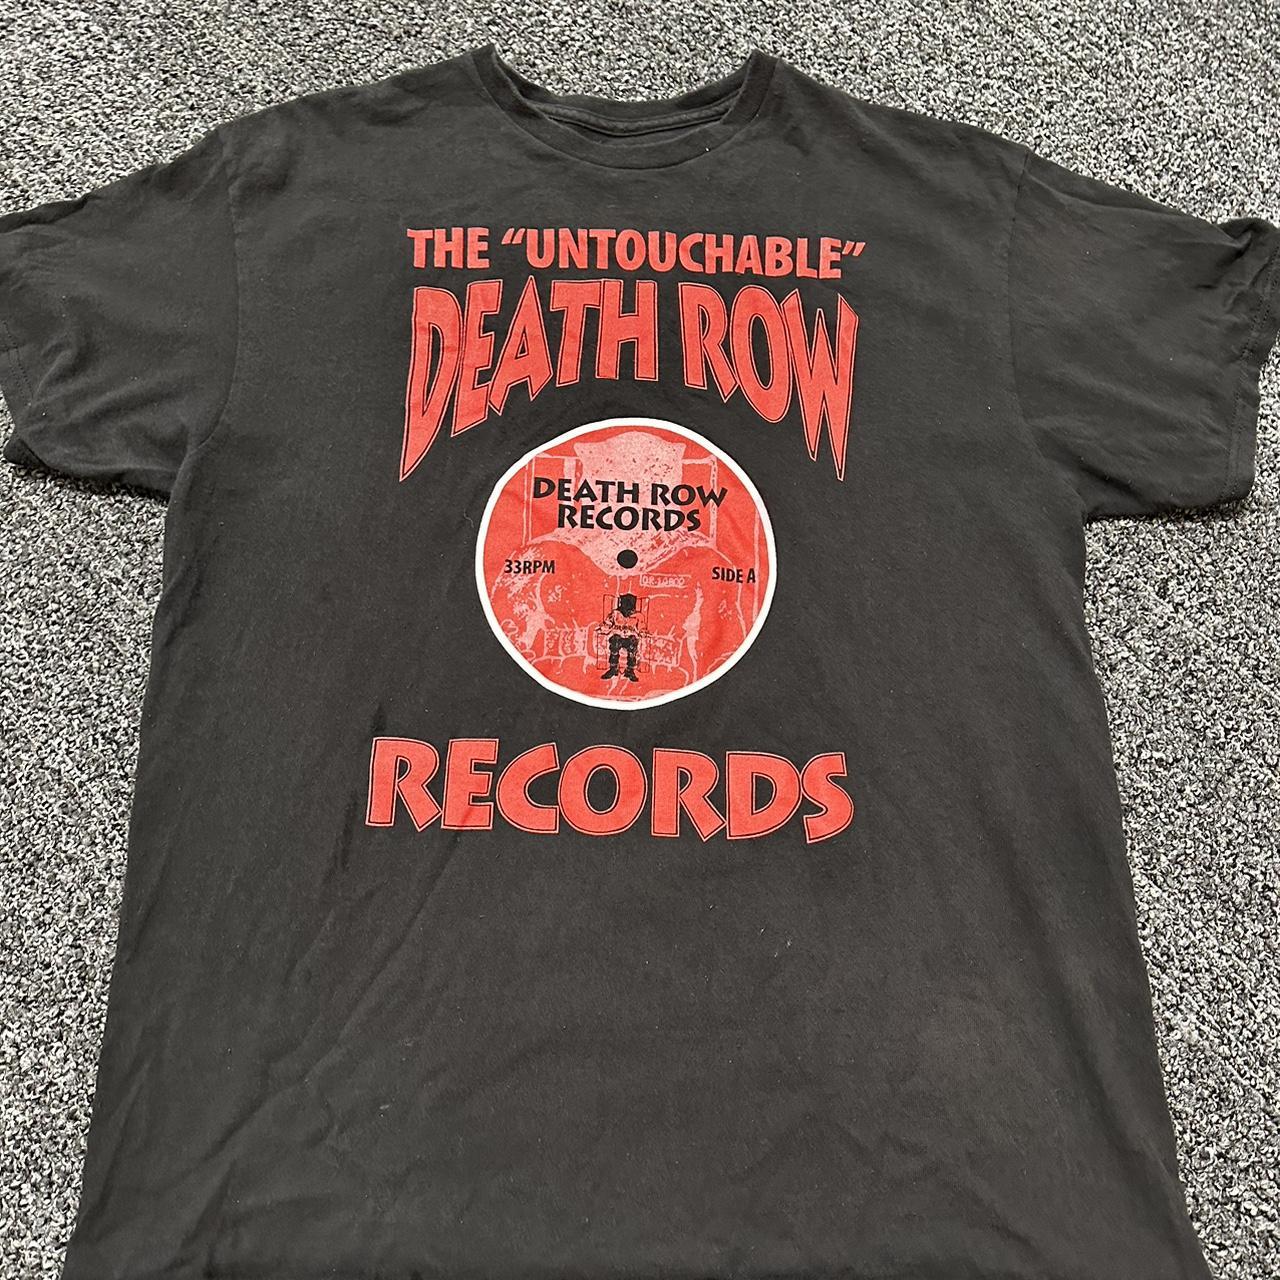 Death Row shirt size L #deathrow #vintage #music - Depop